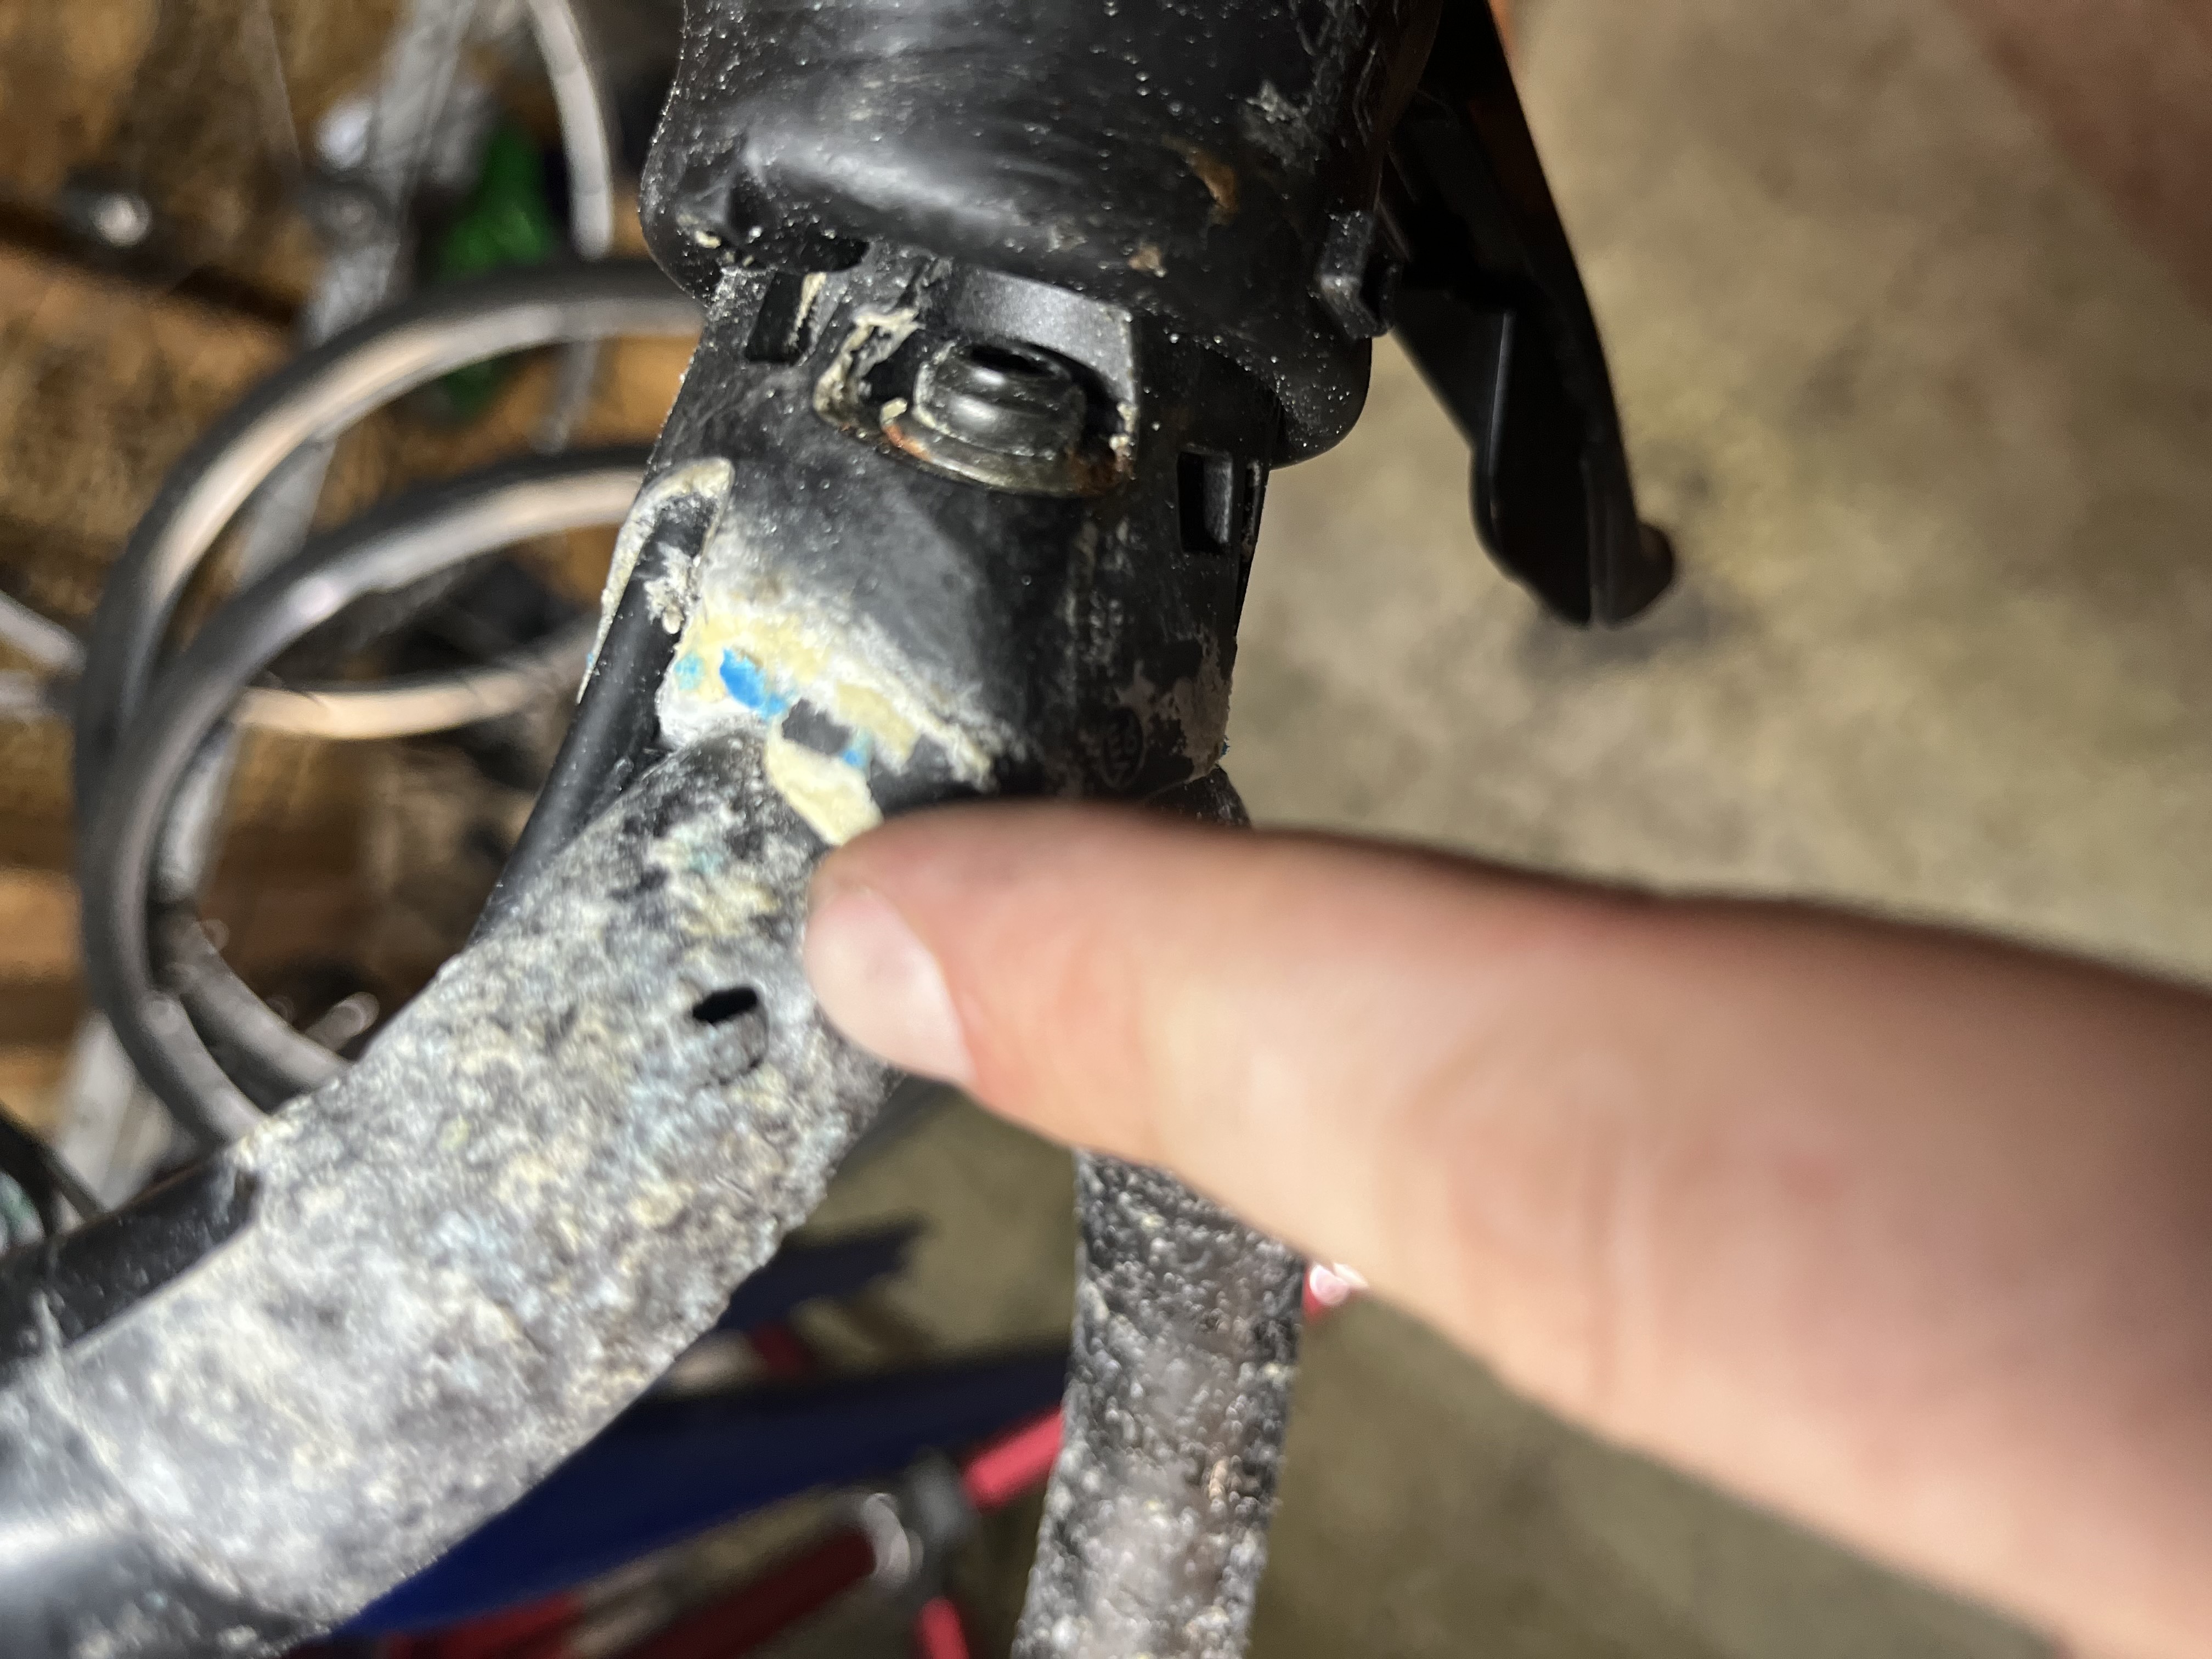 alloy handlebar with bad sweat corrosion